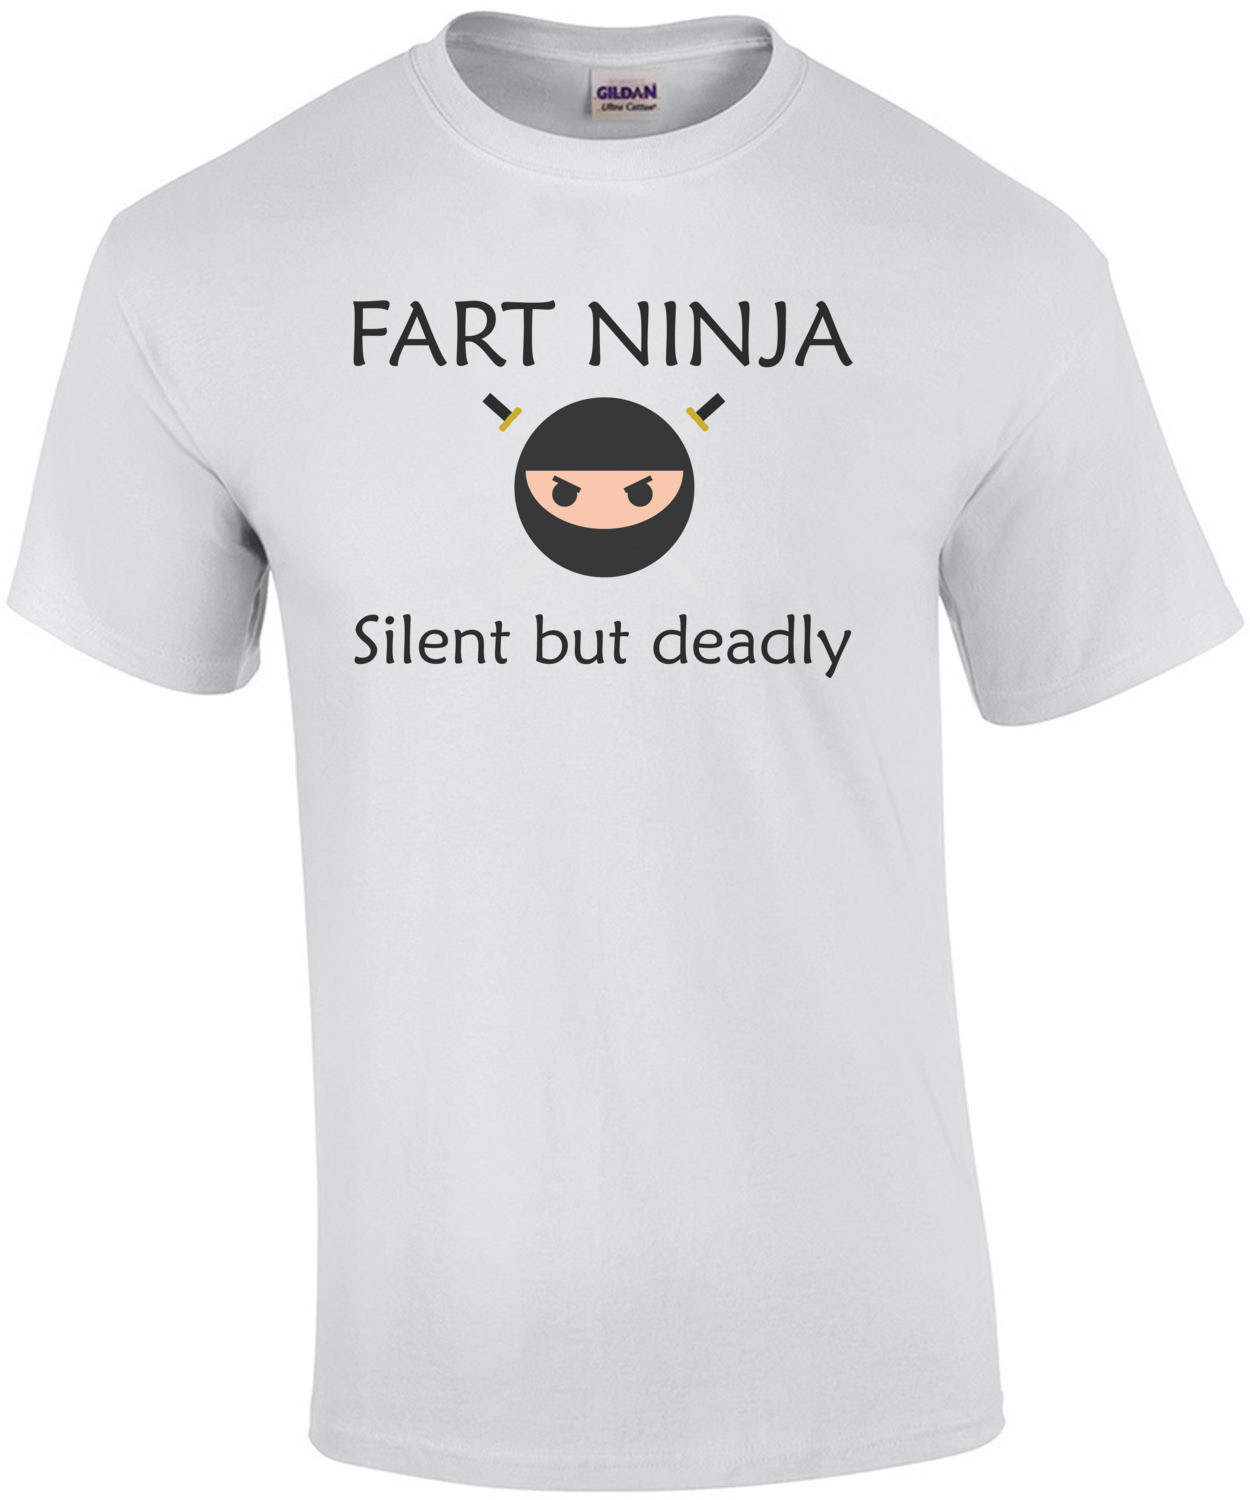 Fart ninja - Silent but deadly. Funny T-Shirt